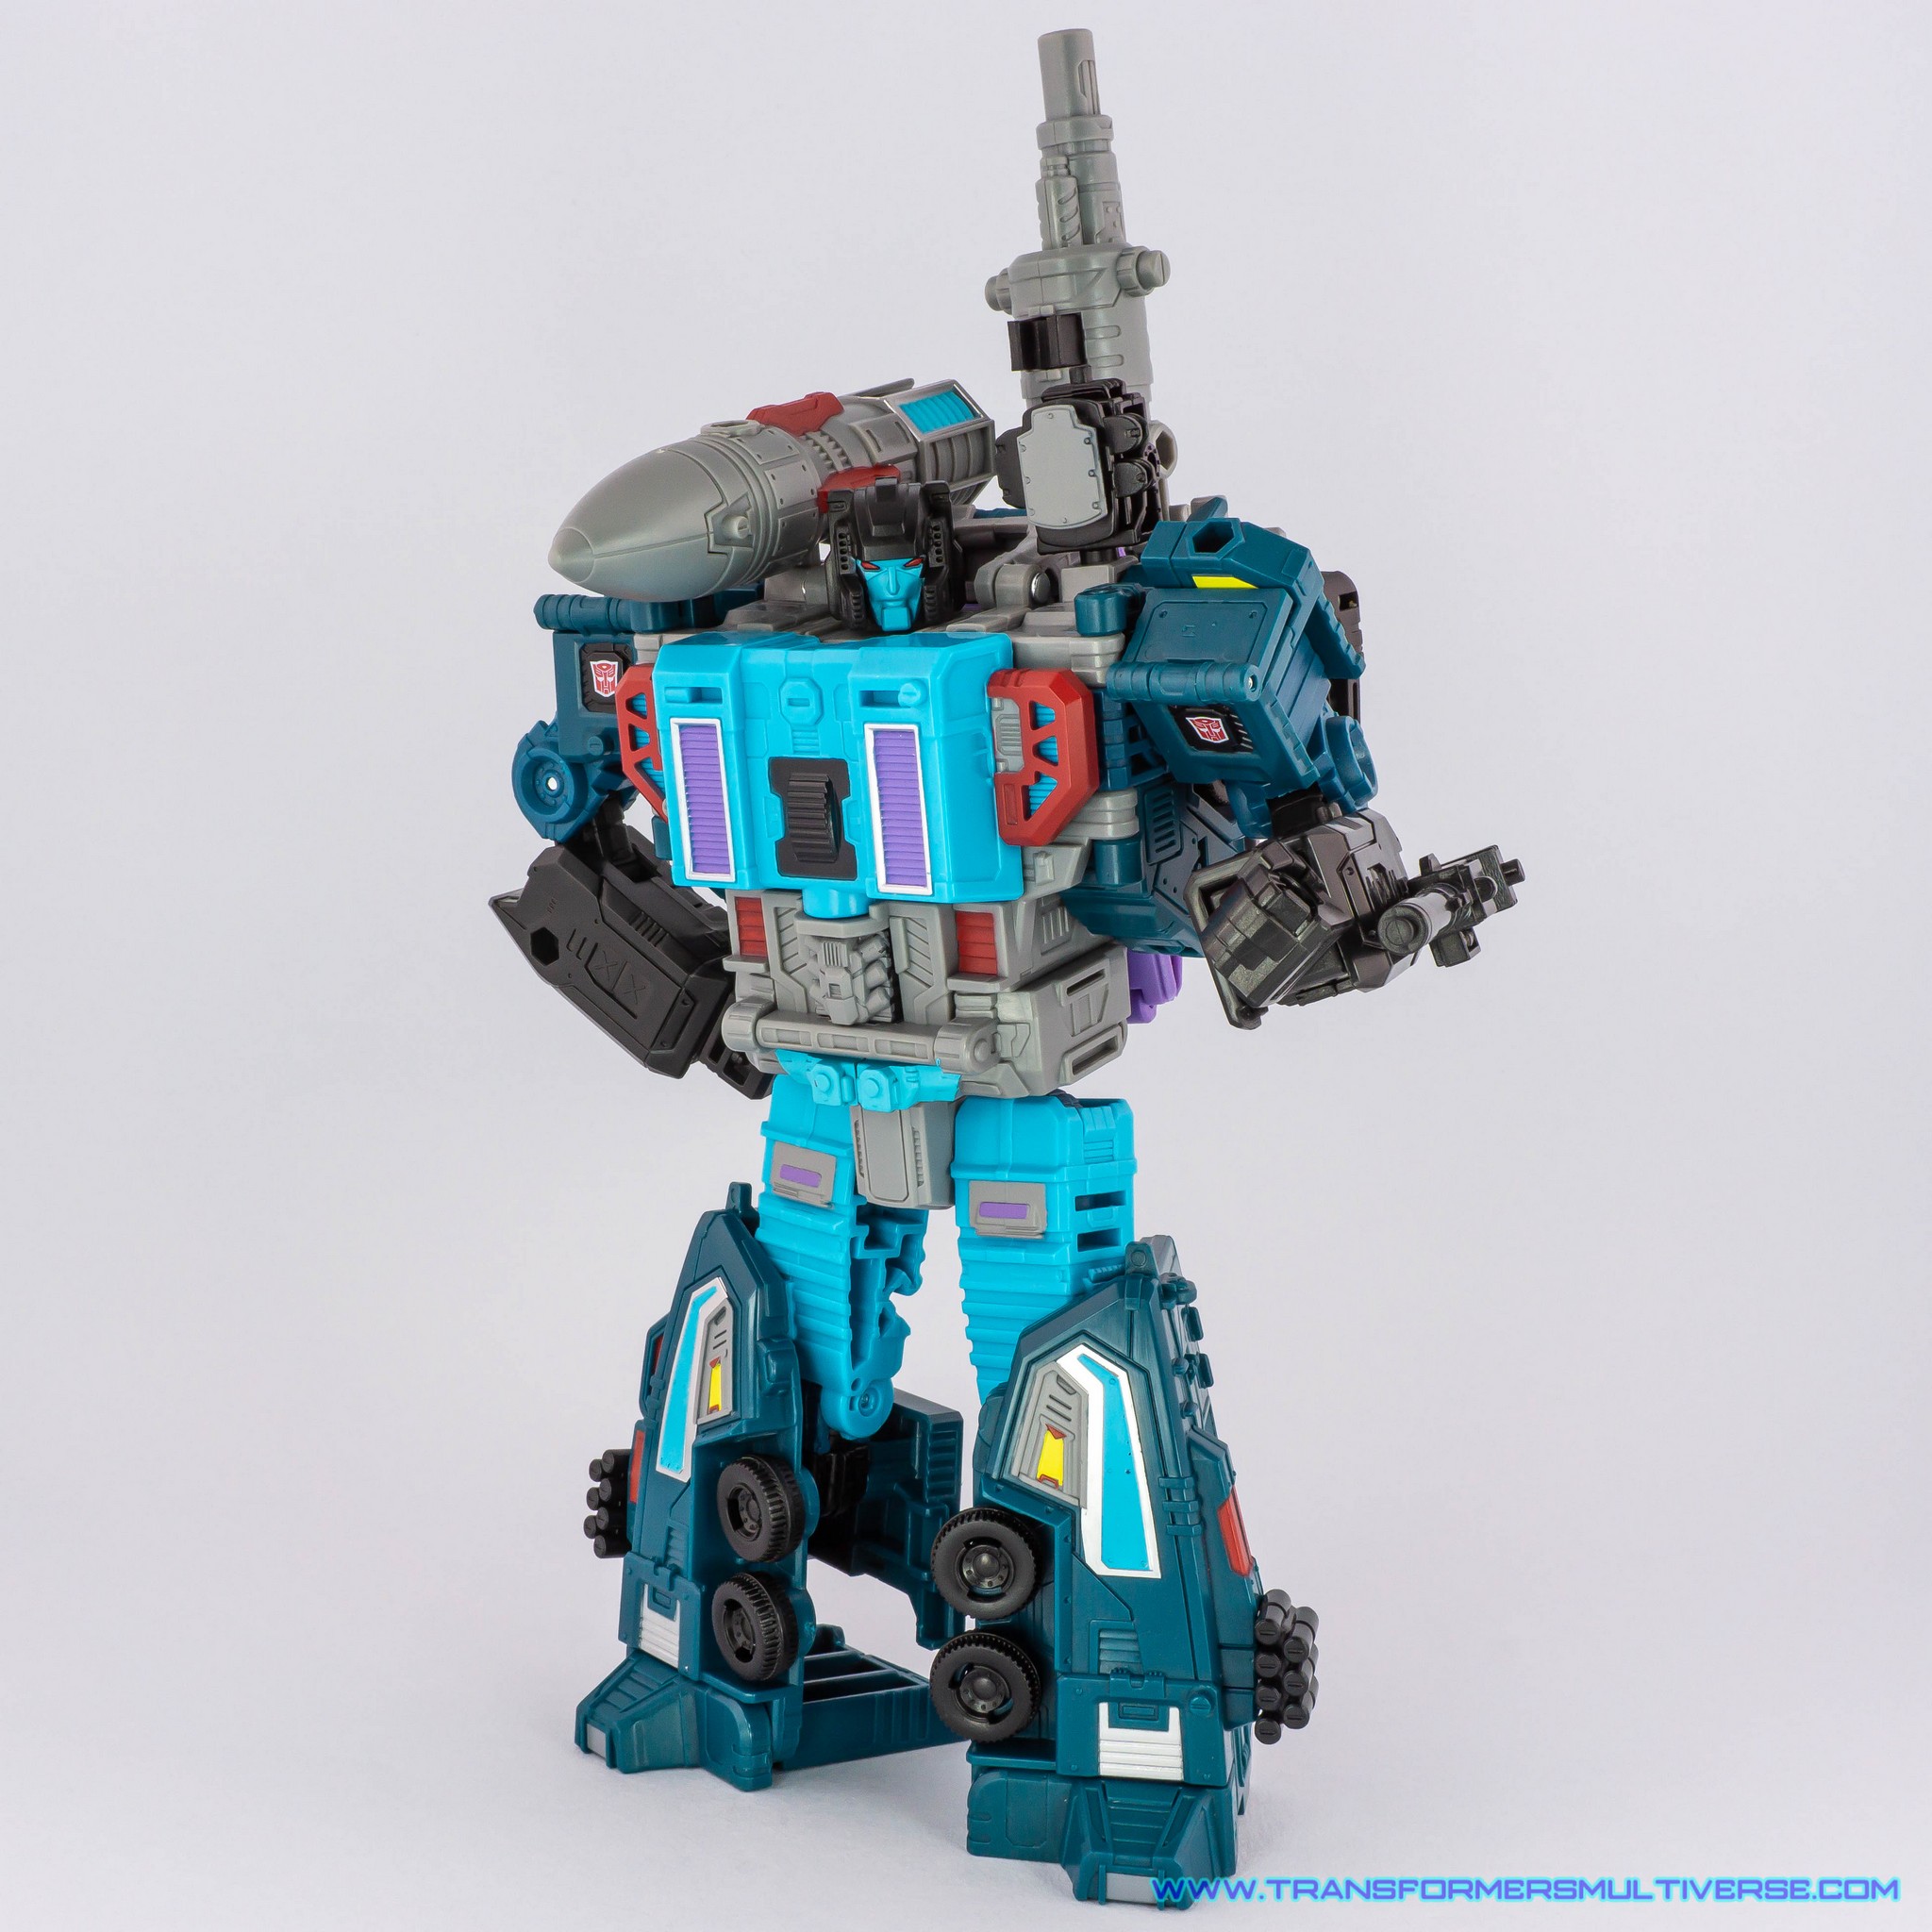 Transformers Earthrise Doubledealer robot mode posed 1